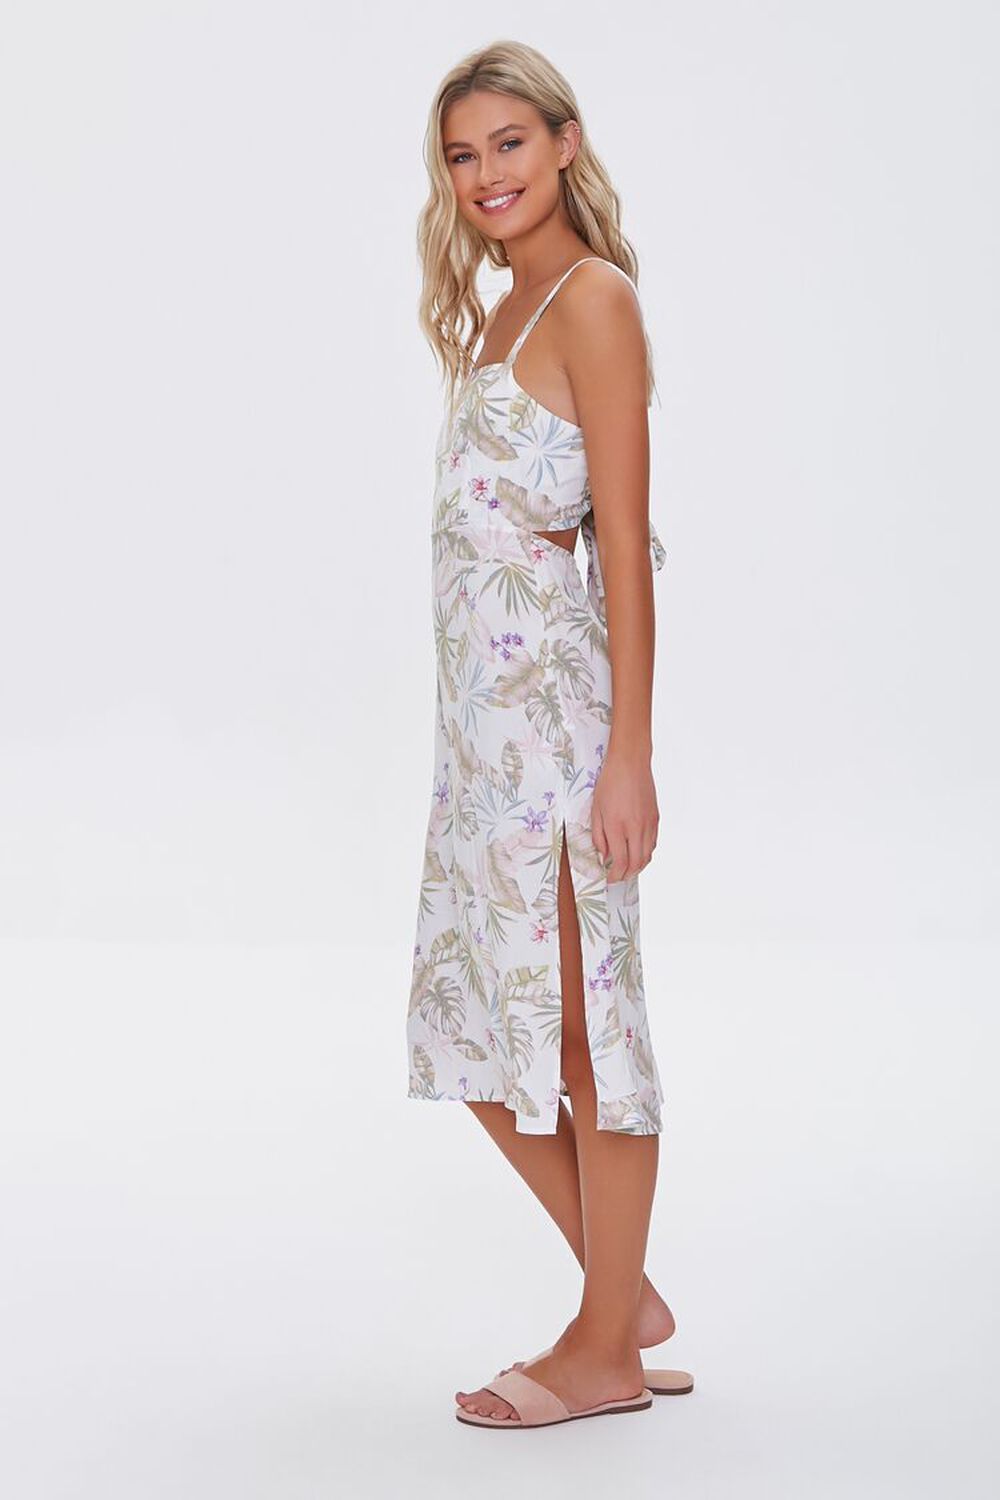 CREAM/MULTI Tropical Leaf Print Dress, image 2